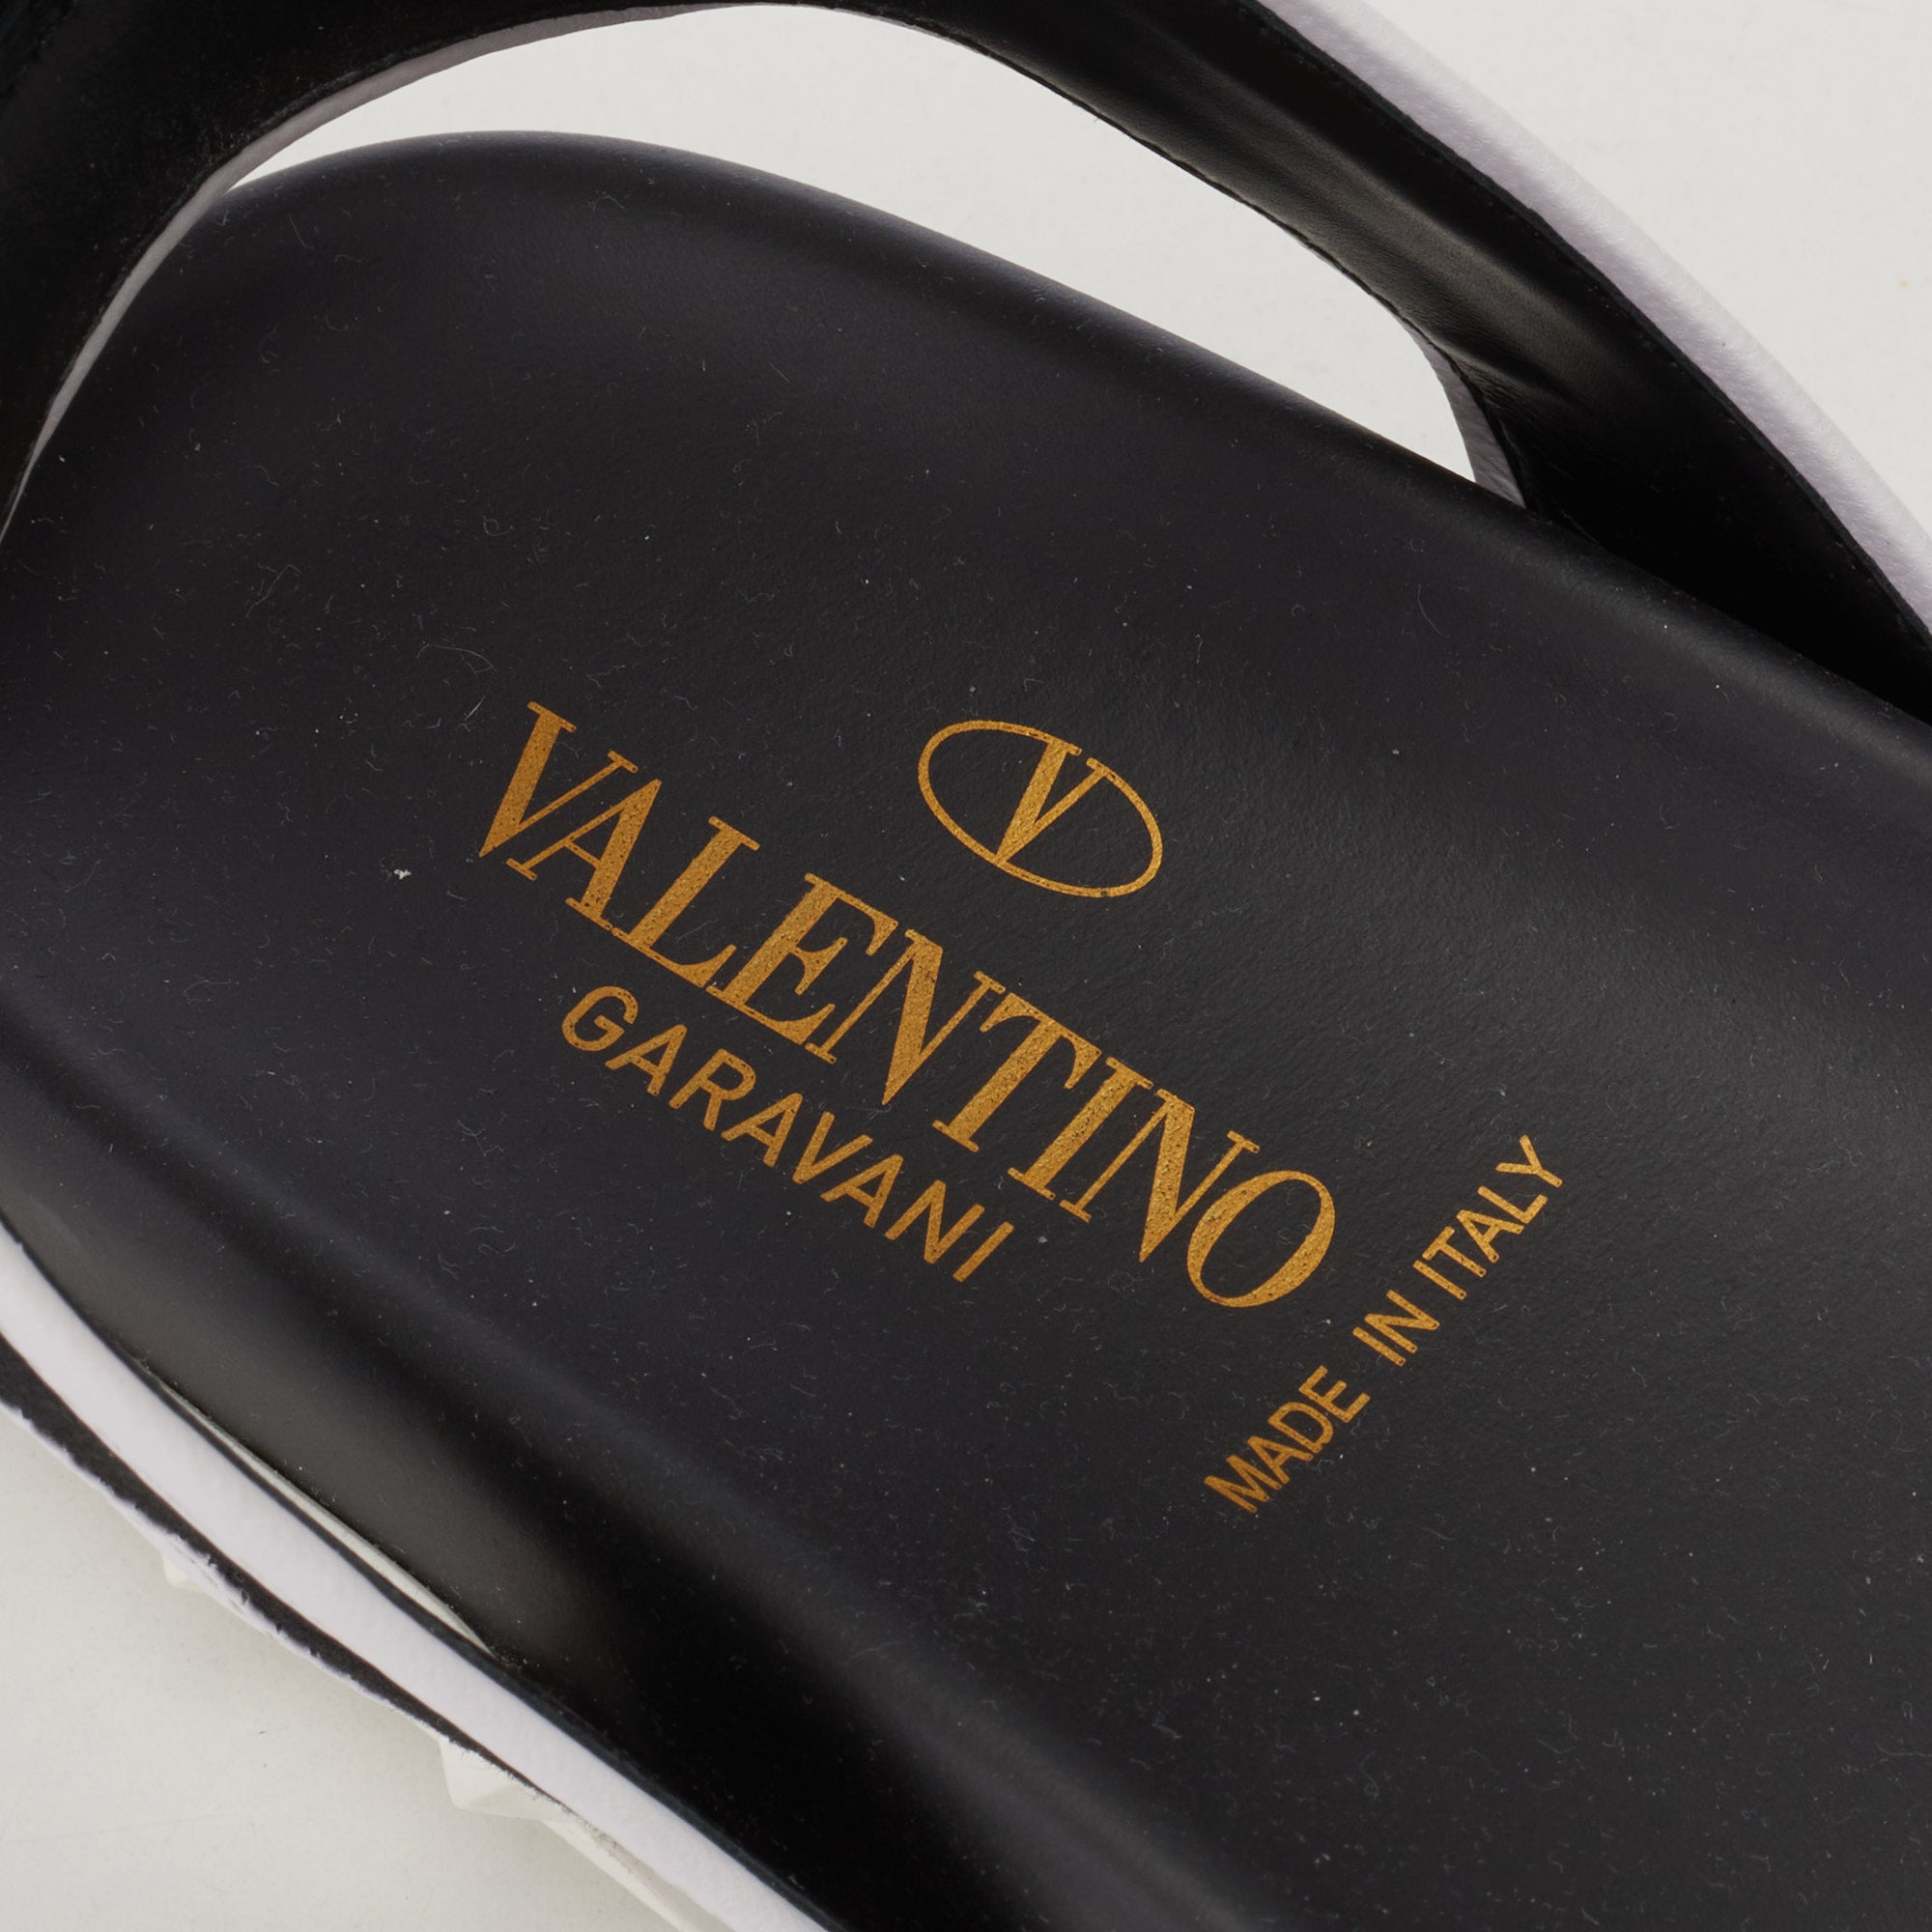 VALENTINO Garavani Black-White Stud Flat Sandal EU 35.5 US 5.5 NEW with Box WOMEN'S BOUTIQUE